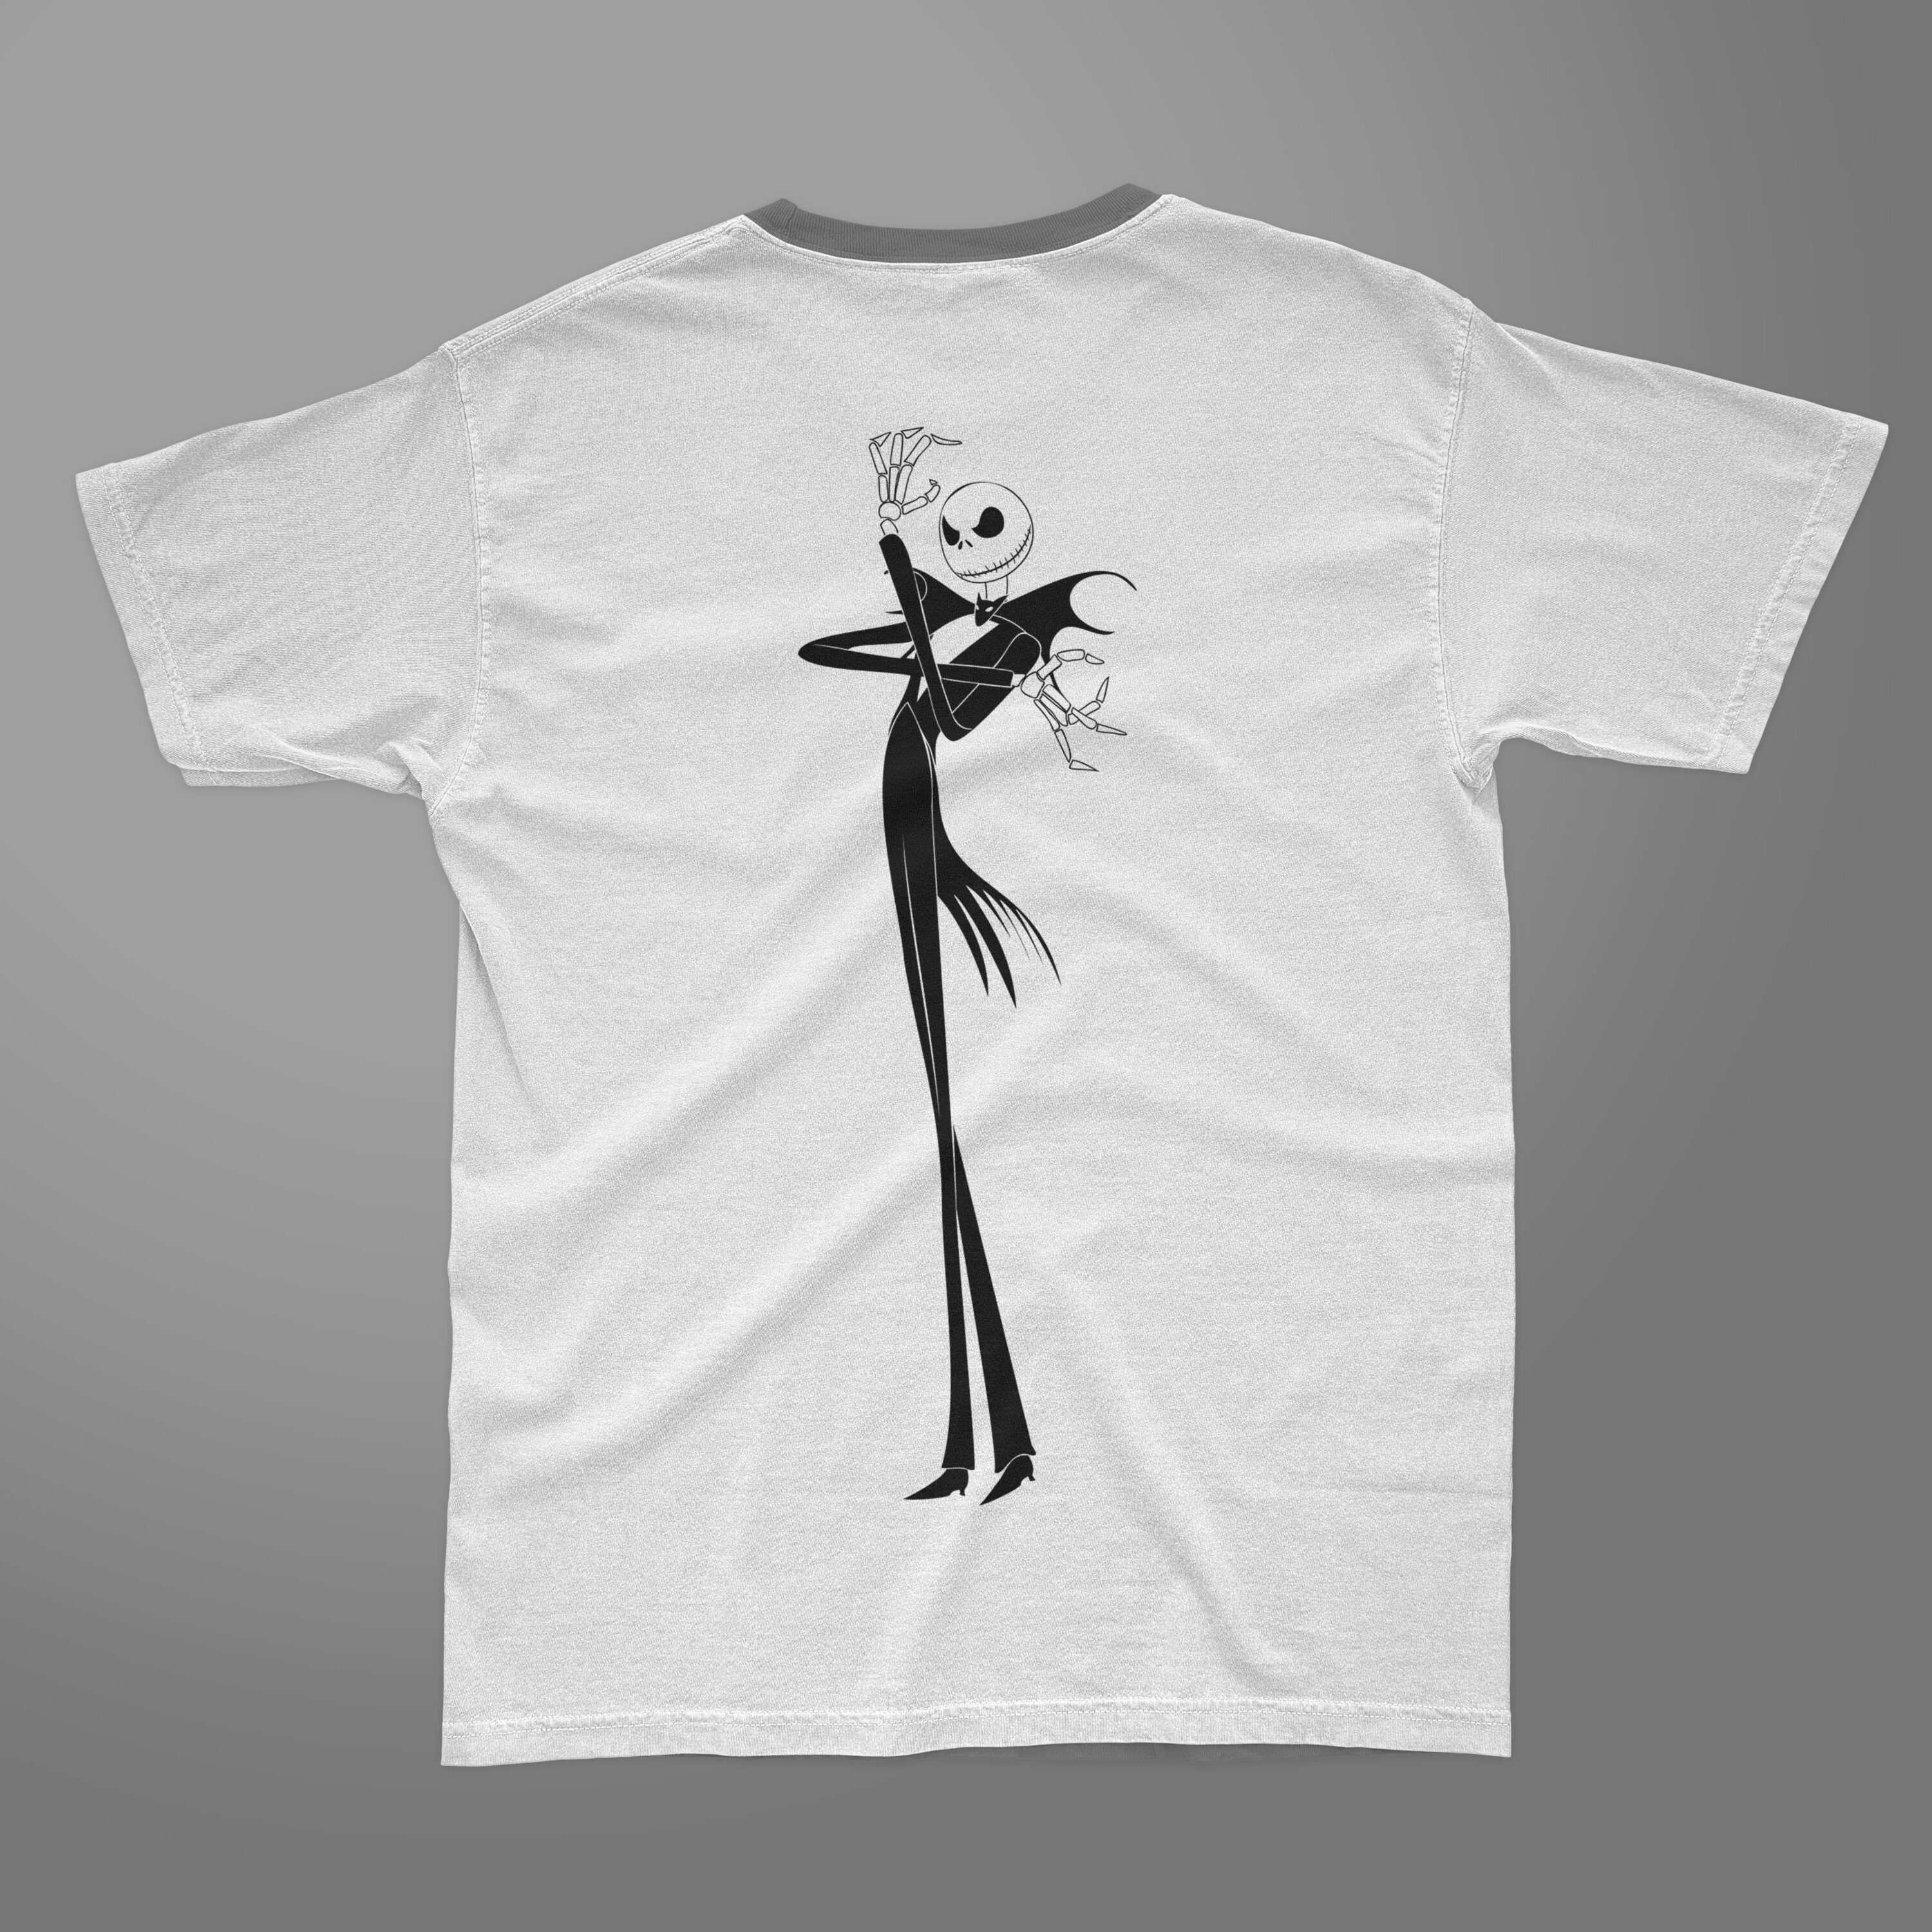 Silhouette jack skellington for your t-shirt.